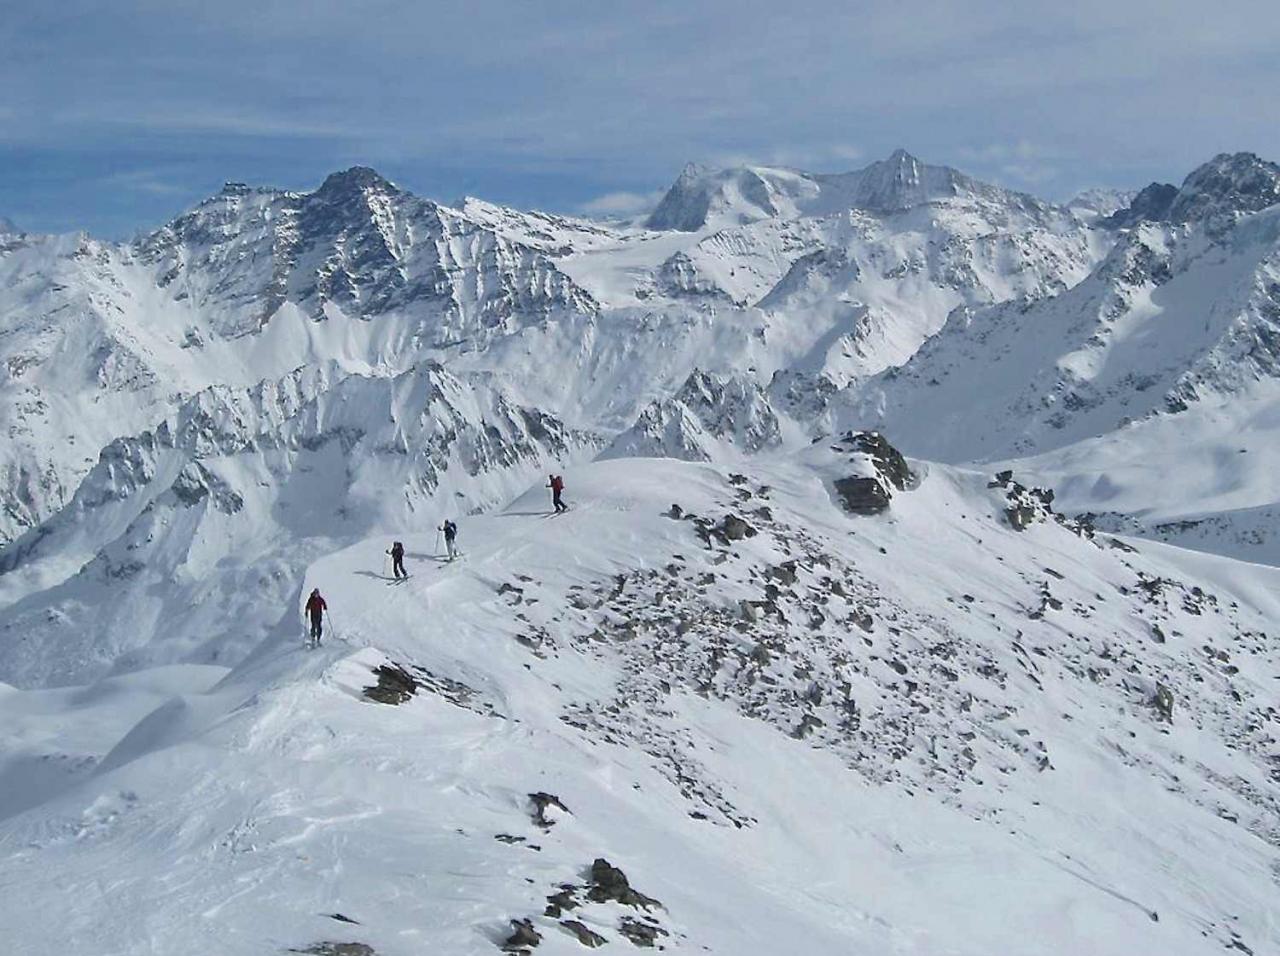 Ski touring Switzerland | Champex-Lac and Grand St Bernard